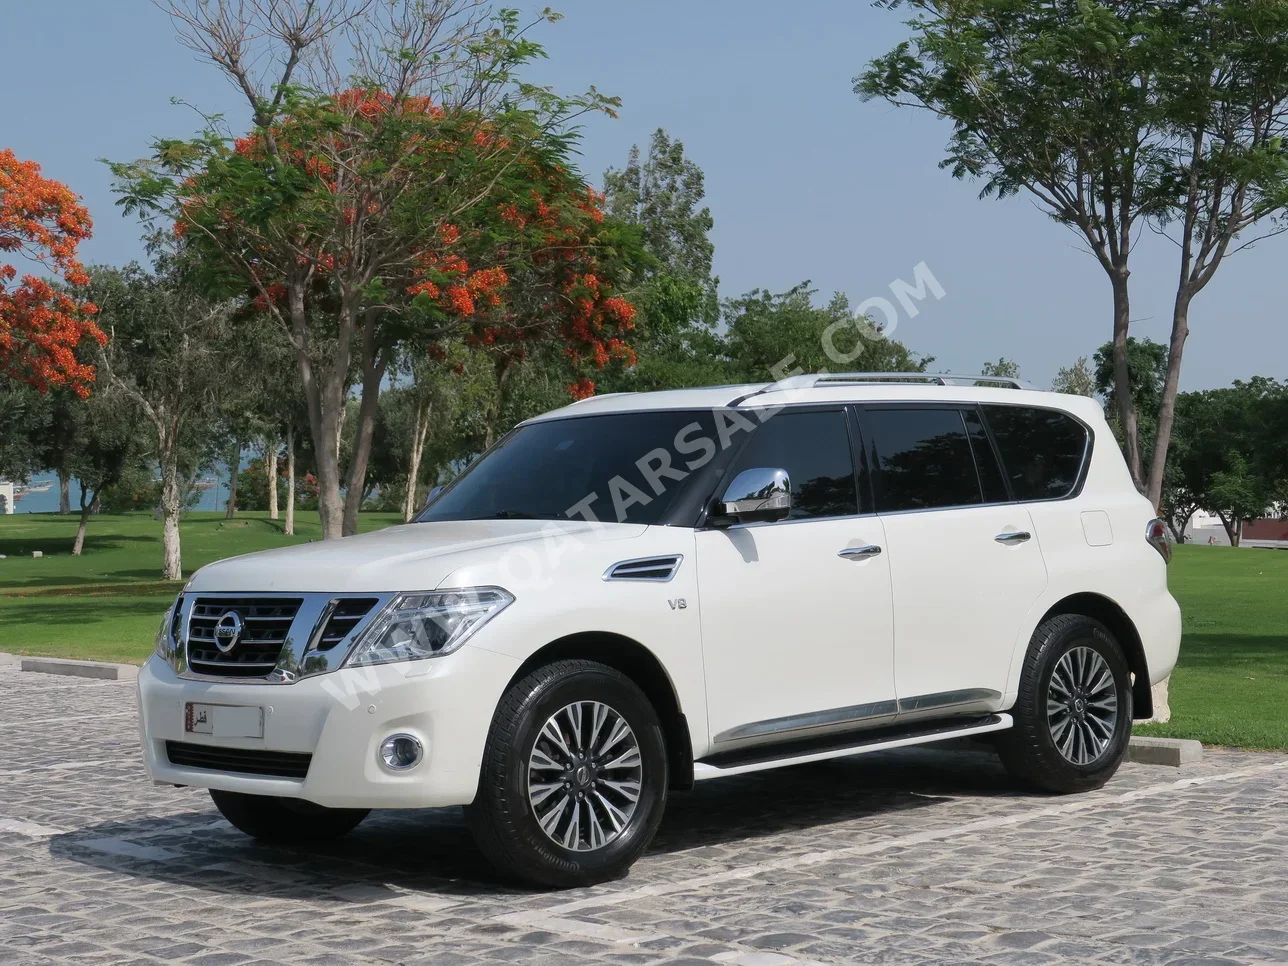 Nissan  Patrol  Platinum  2014  Automatic  167,000 Km  8 Cylinder  Four Wheel Drive (4WD)  SUV  White